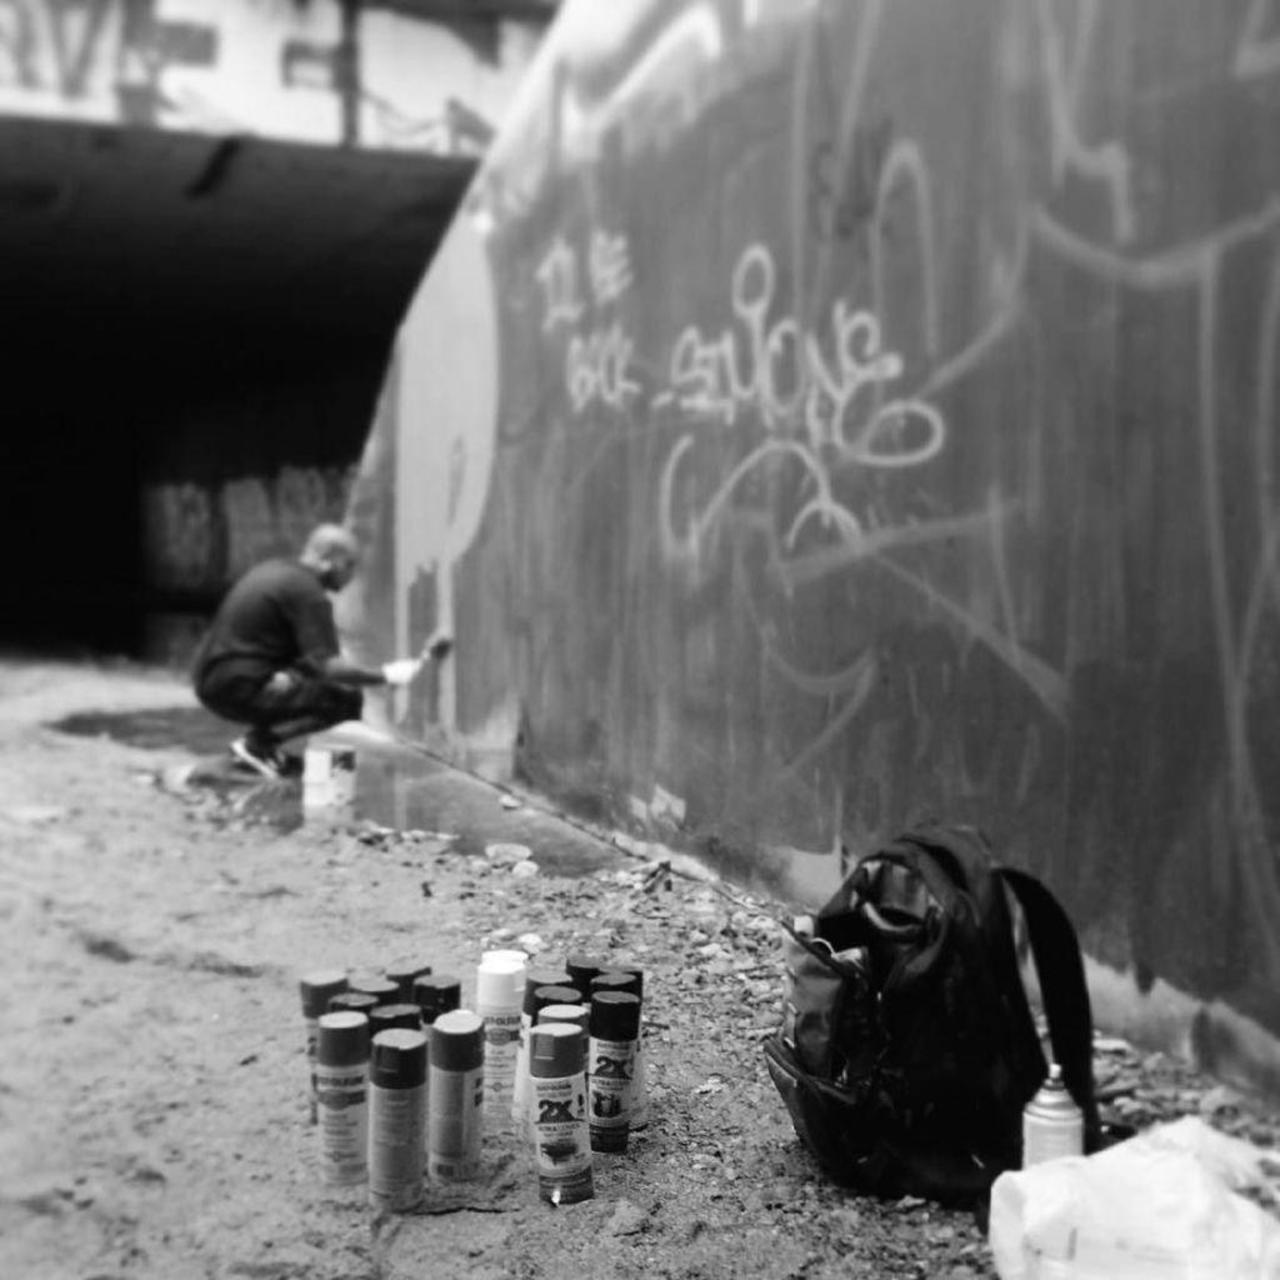 RT @artpushr: via #hainspoint "http://bit.ly/1WAWGb3" #graffiti #streetart http://t.co/2pvKMZaITJ